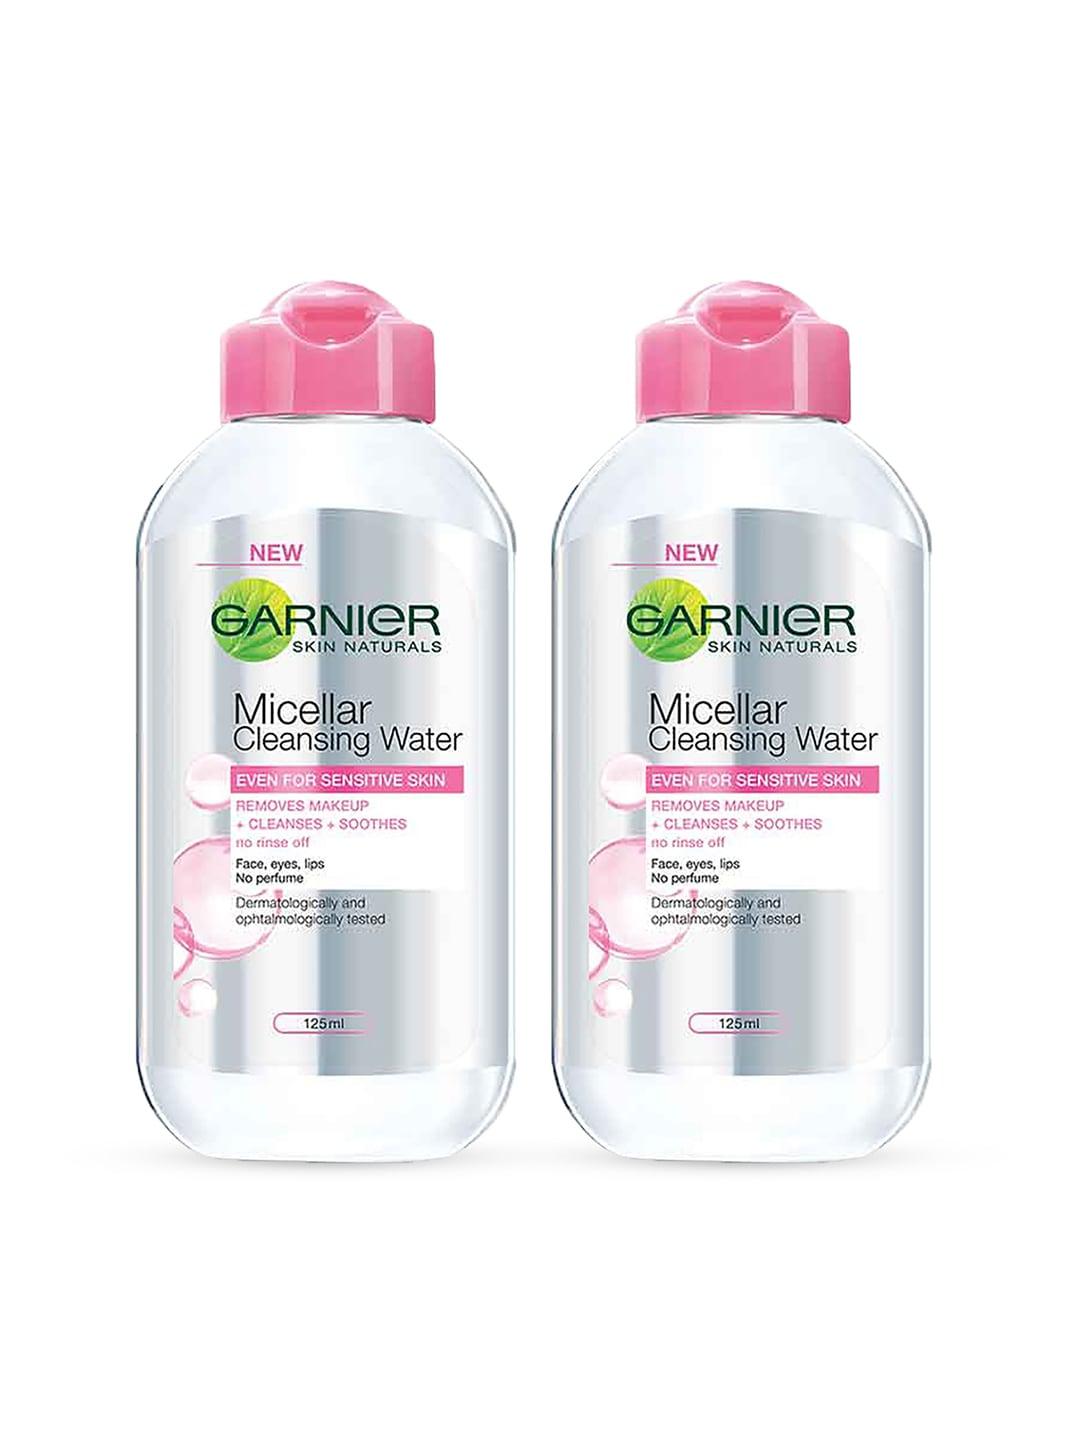 garnier set of 2 skin naturals micellar cleansing water - 125 ml each